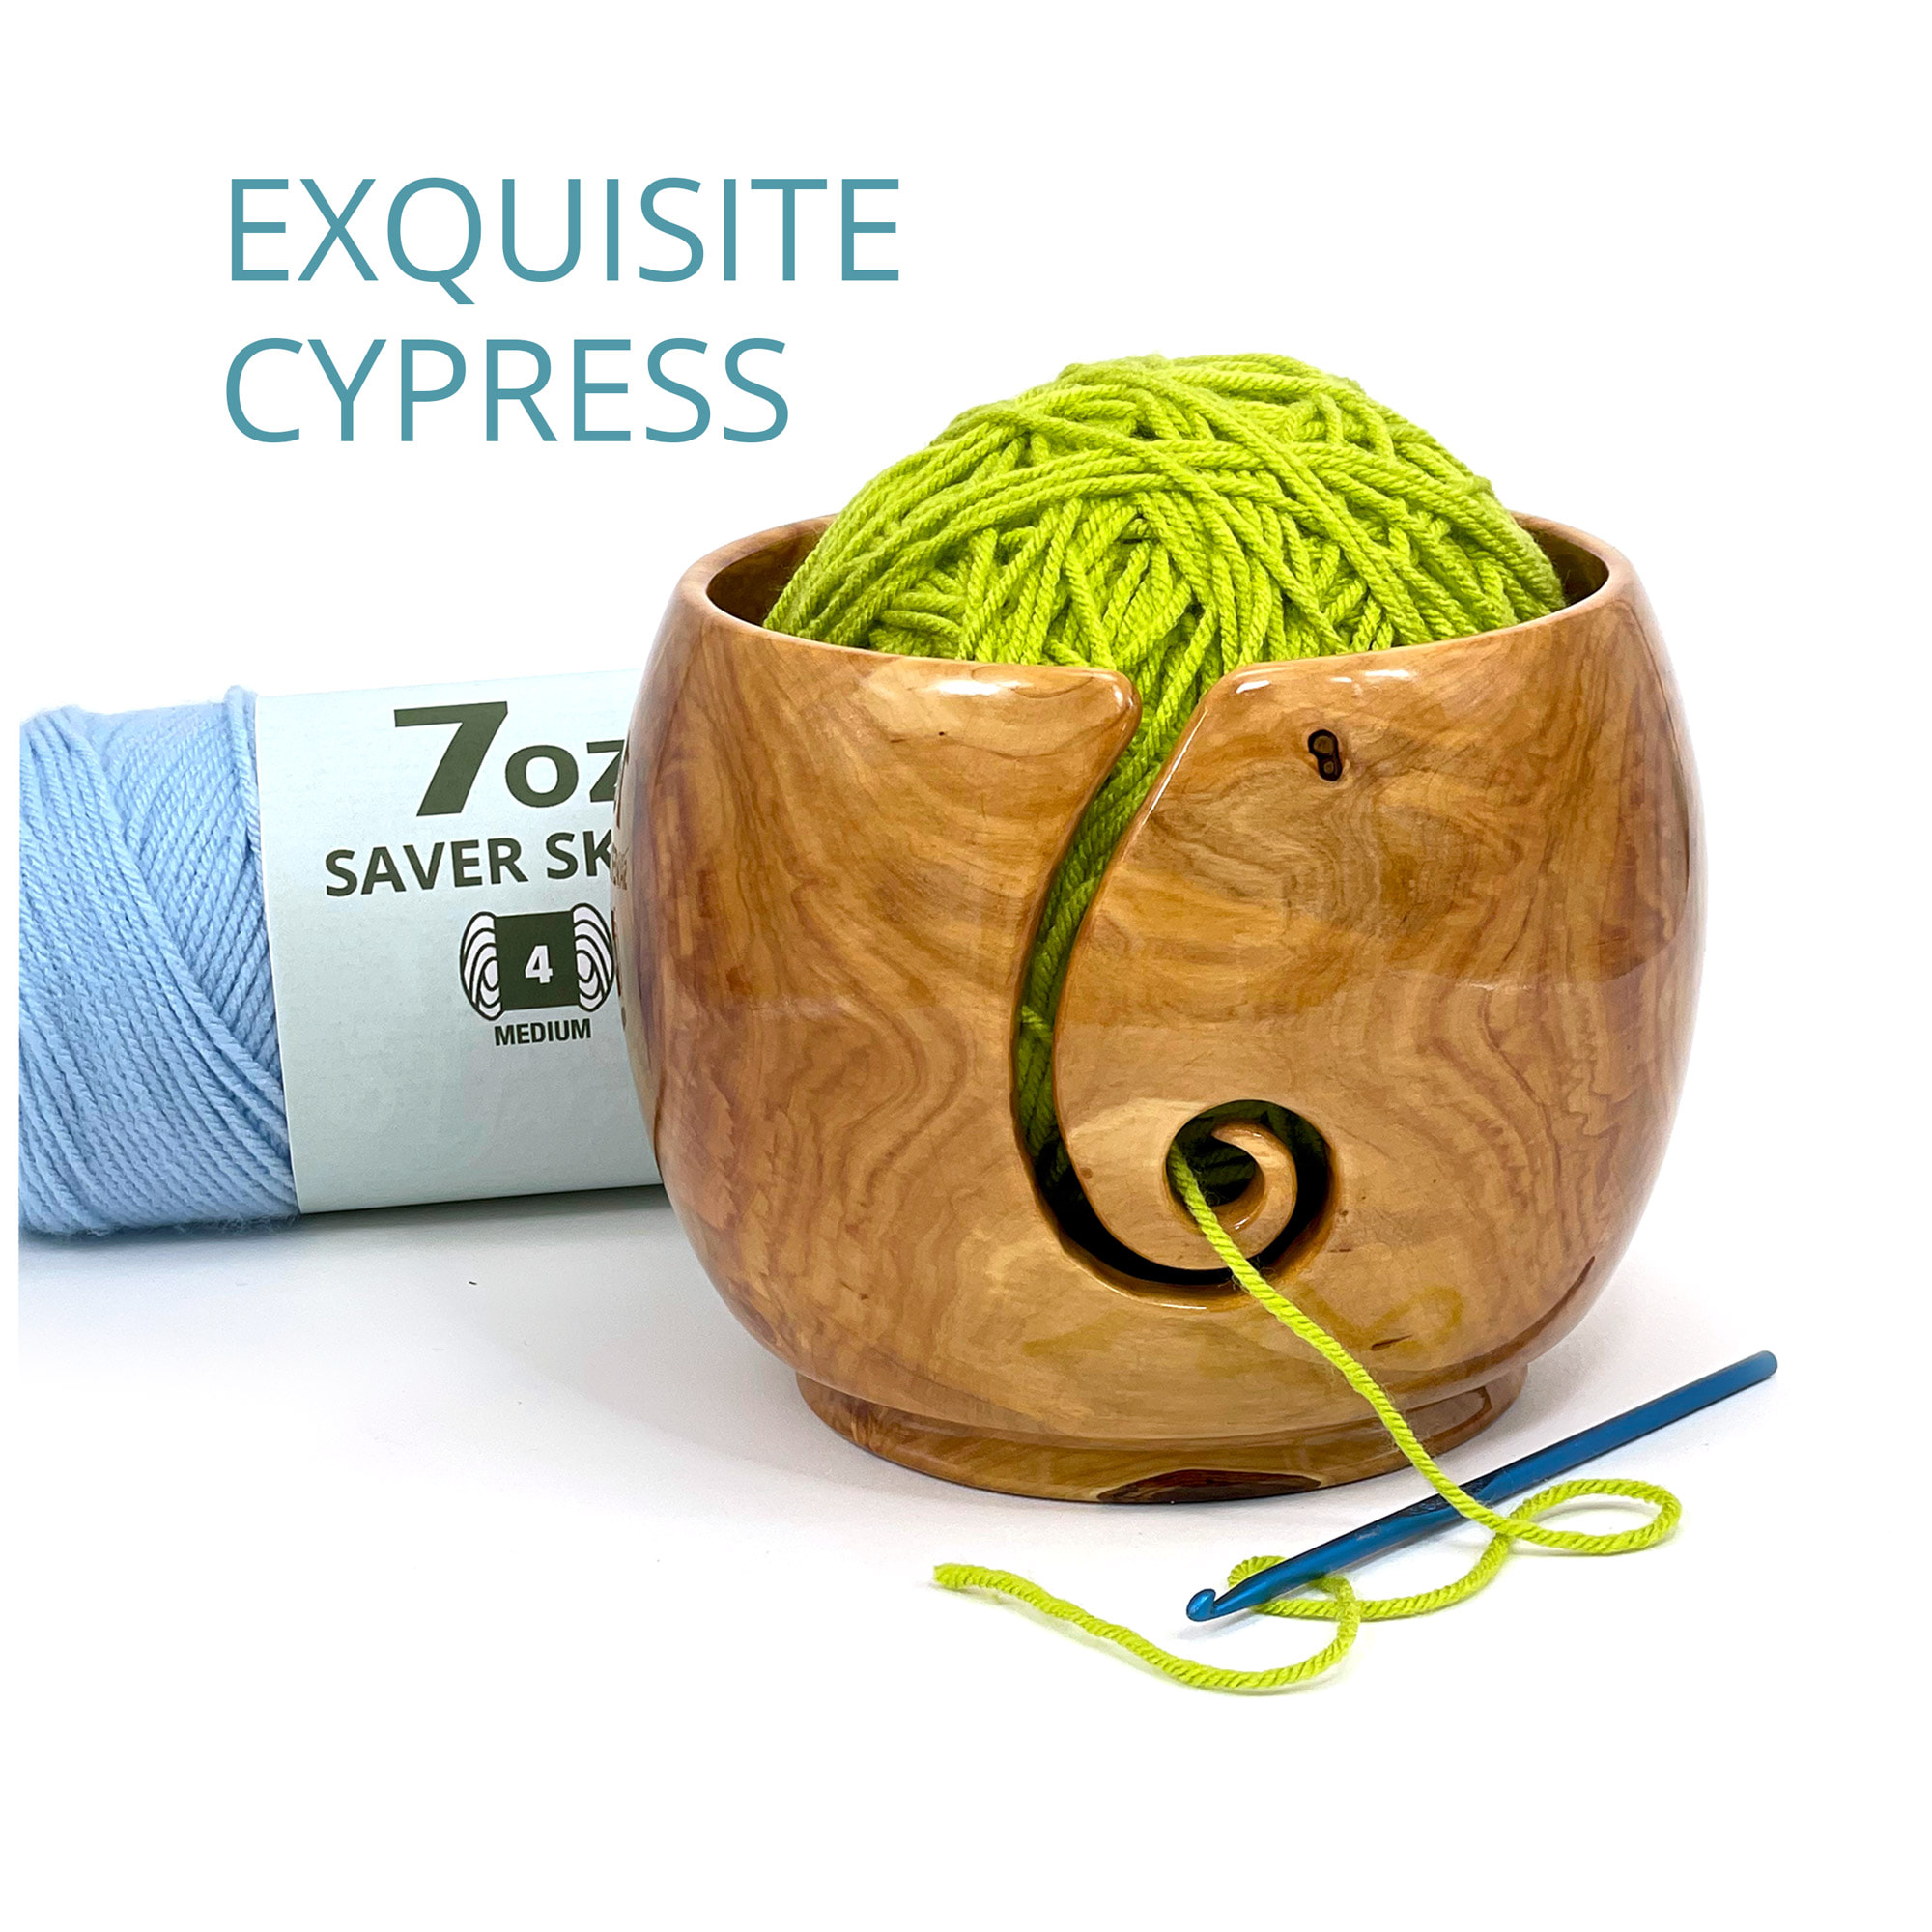 Medium AZ Cypress Yarn Bowl, Star Groove, Golden Grains For Knitting,  Crochet, Yarning #661